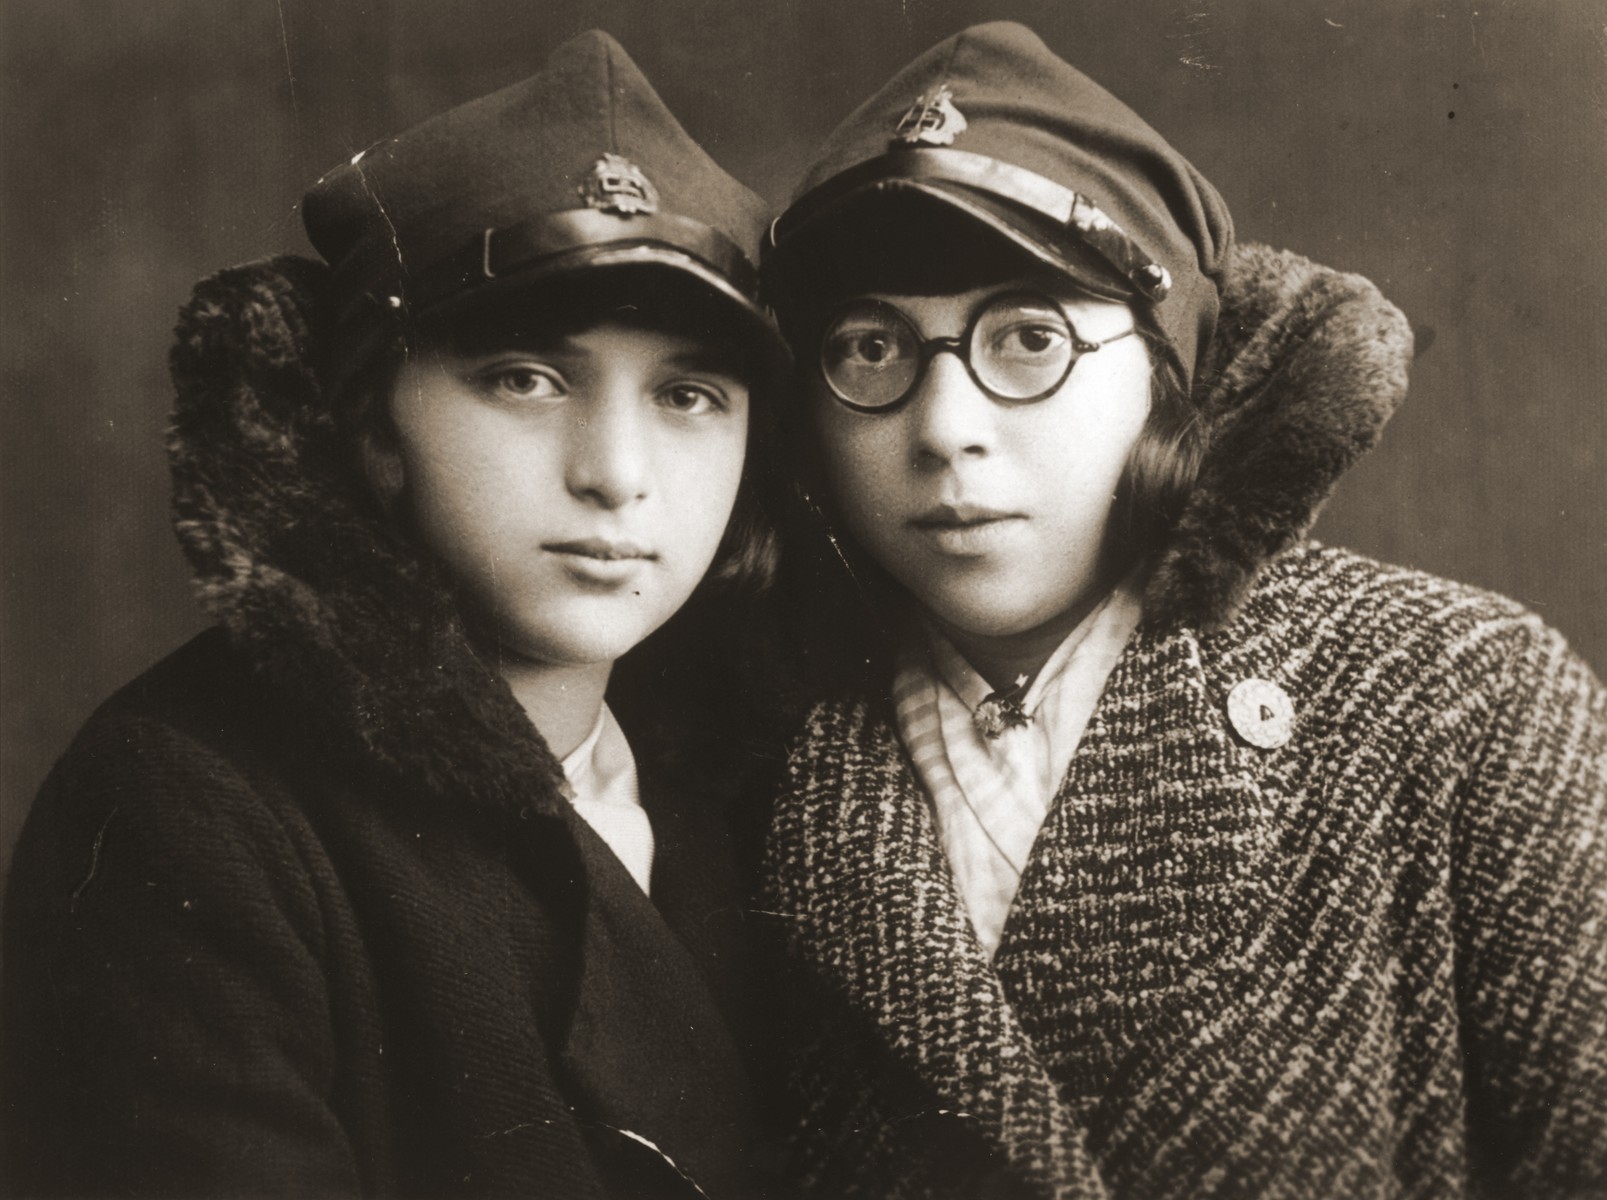 Felicja Berland poses with her friend Genia Laks wearing the hats of their school uniform.